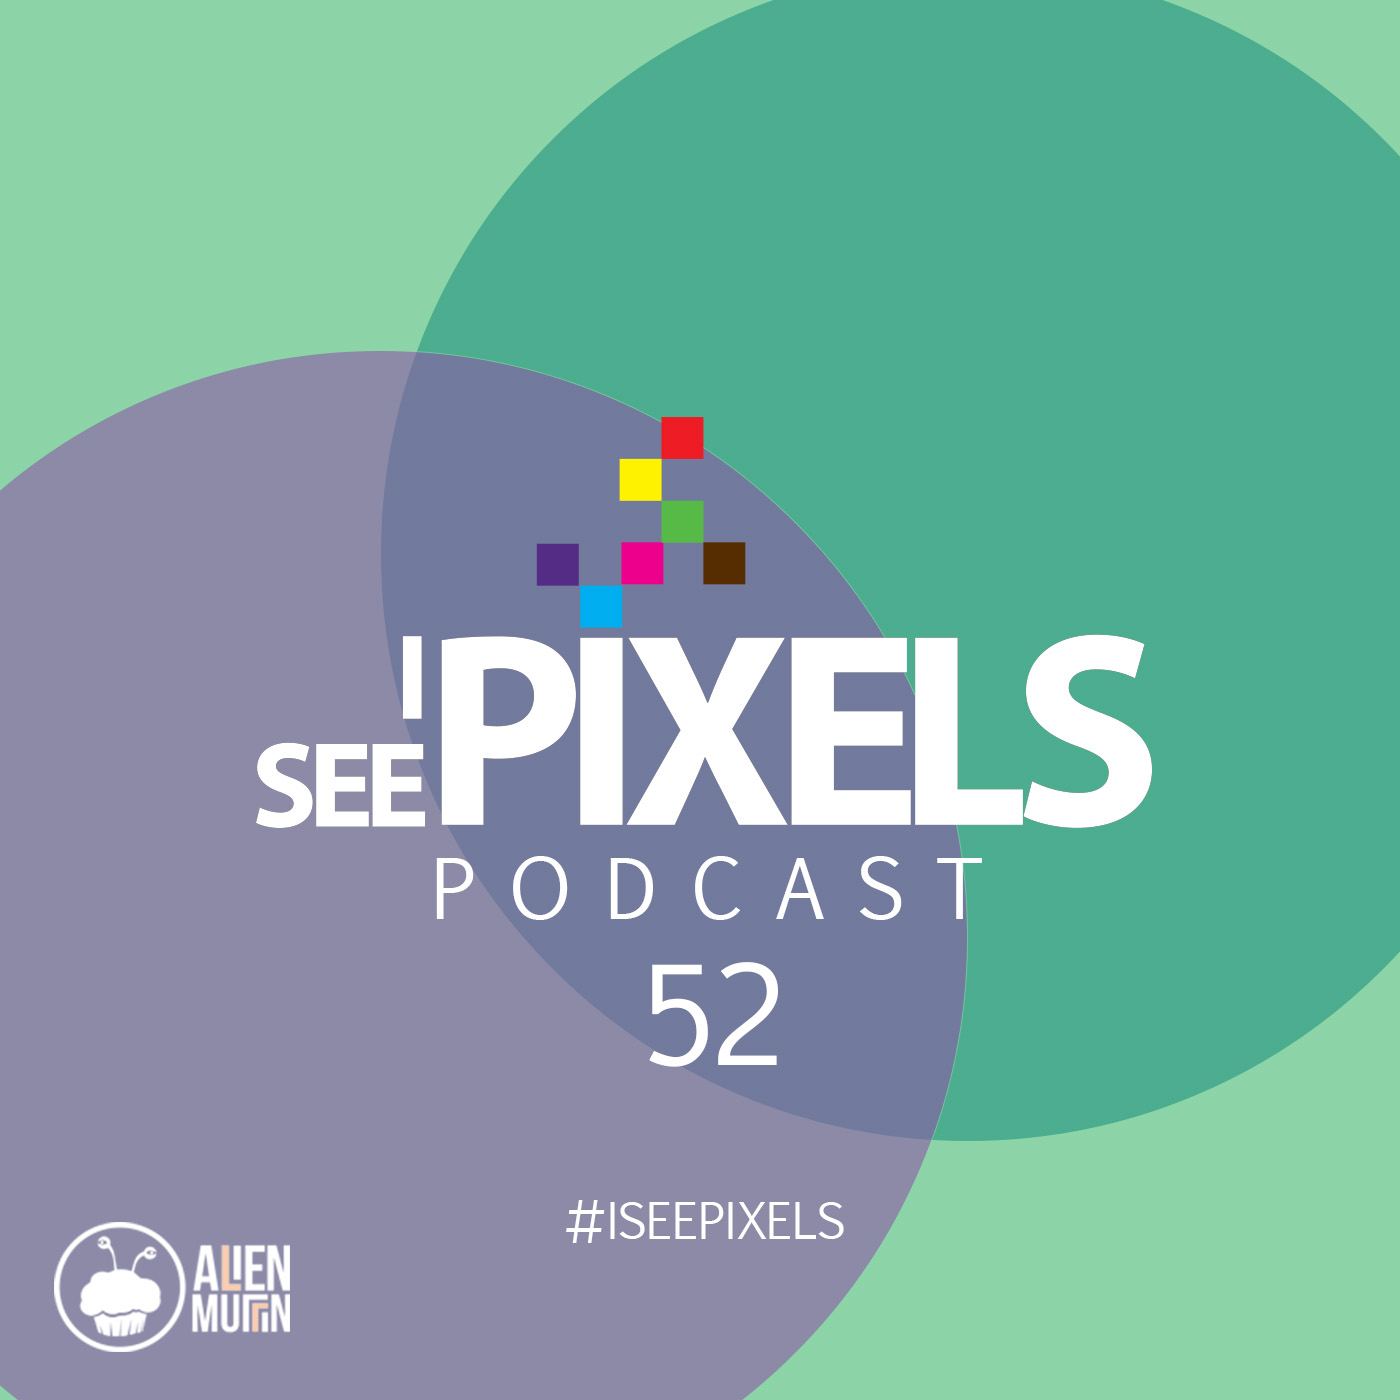 No new trends - I See Pixels Podcast Episode 52